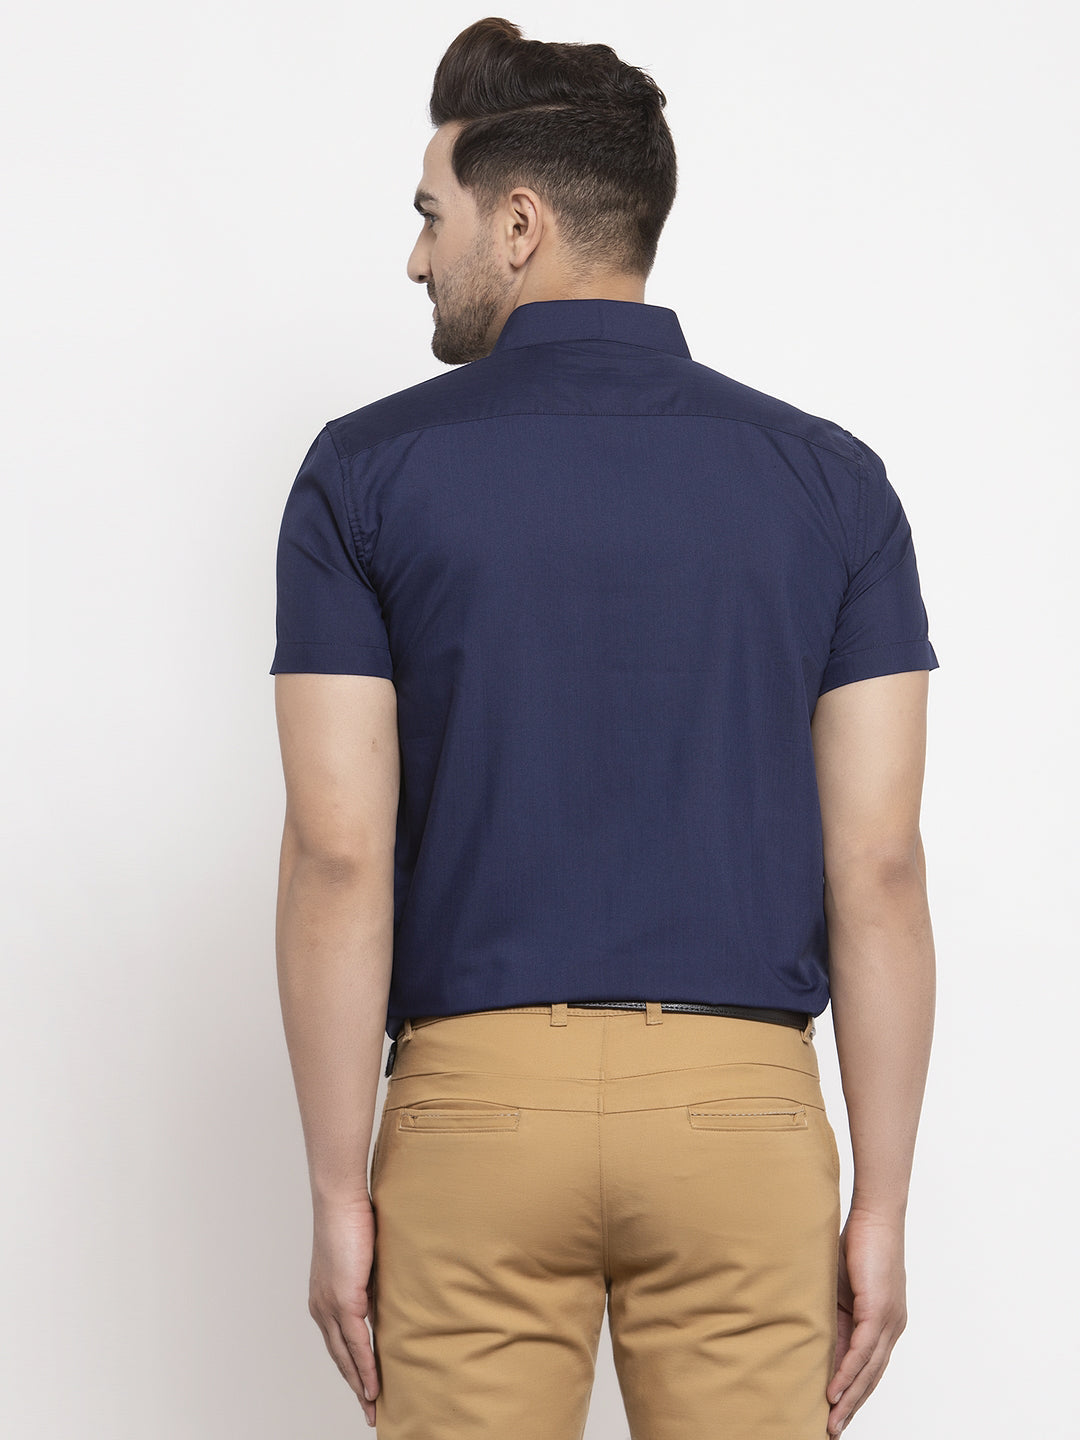 Men's Navy Cotton Half Sleeves Solid Formal Shirts ( SF 754Navy ) - Jainish